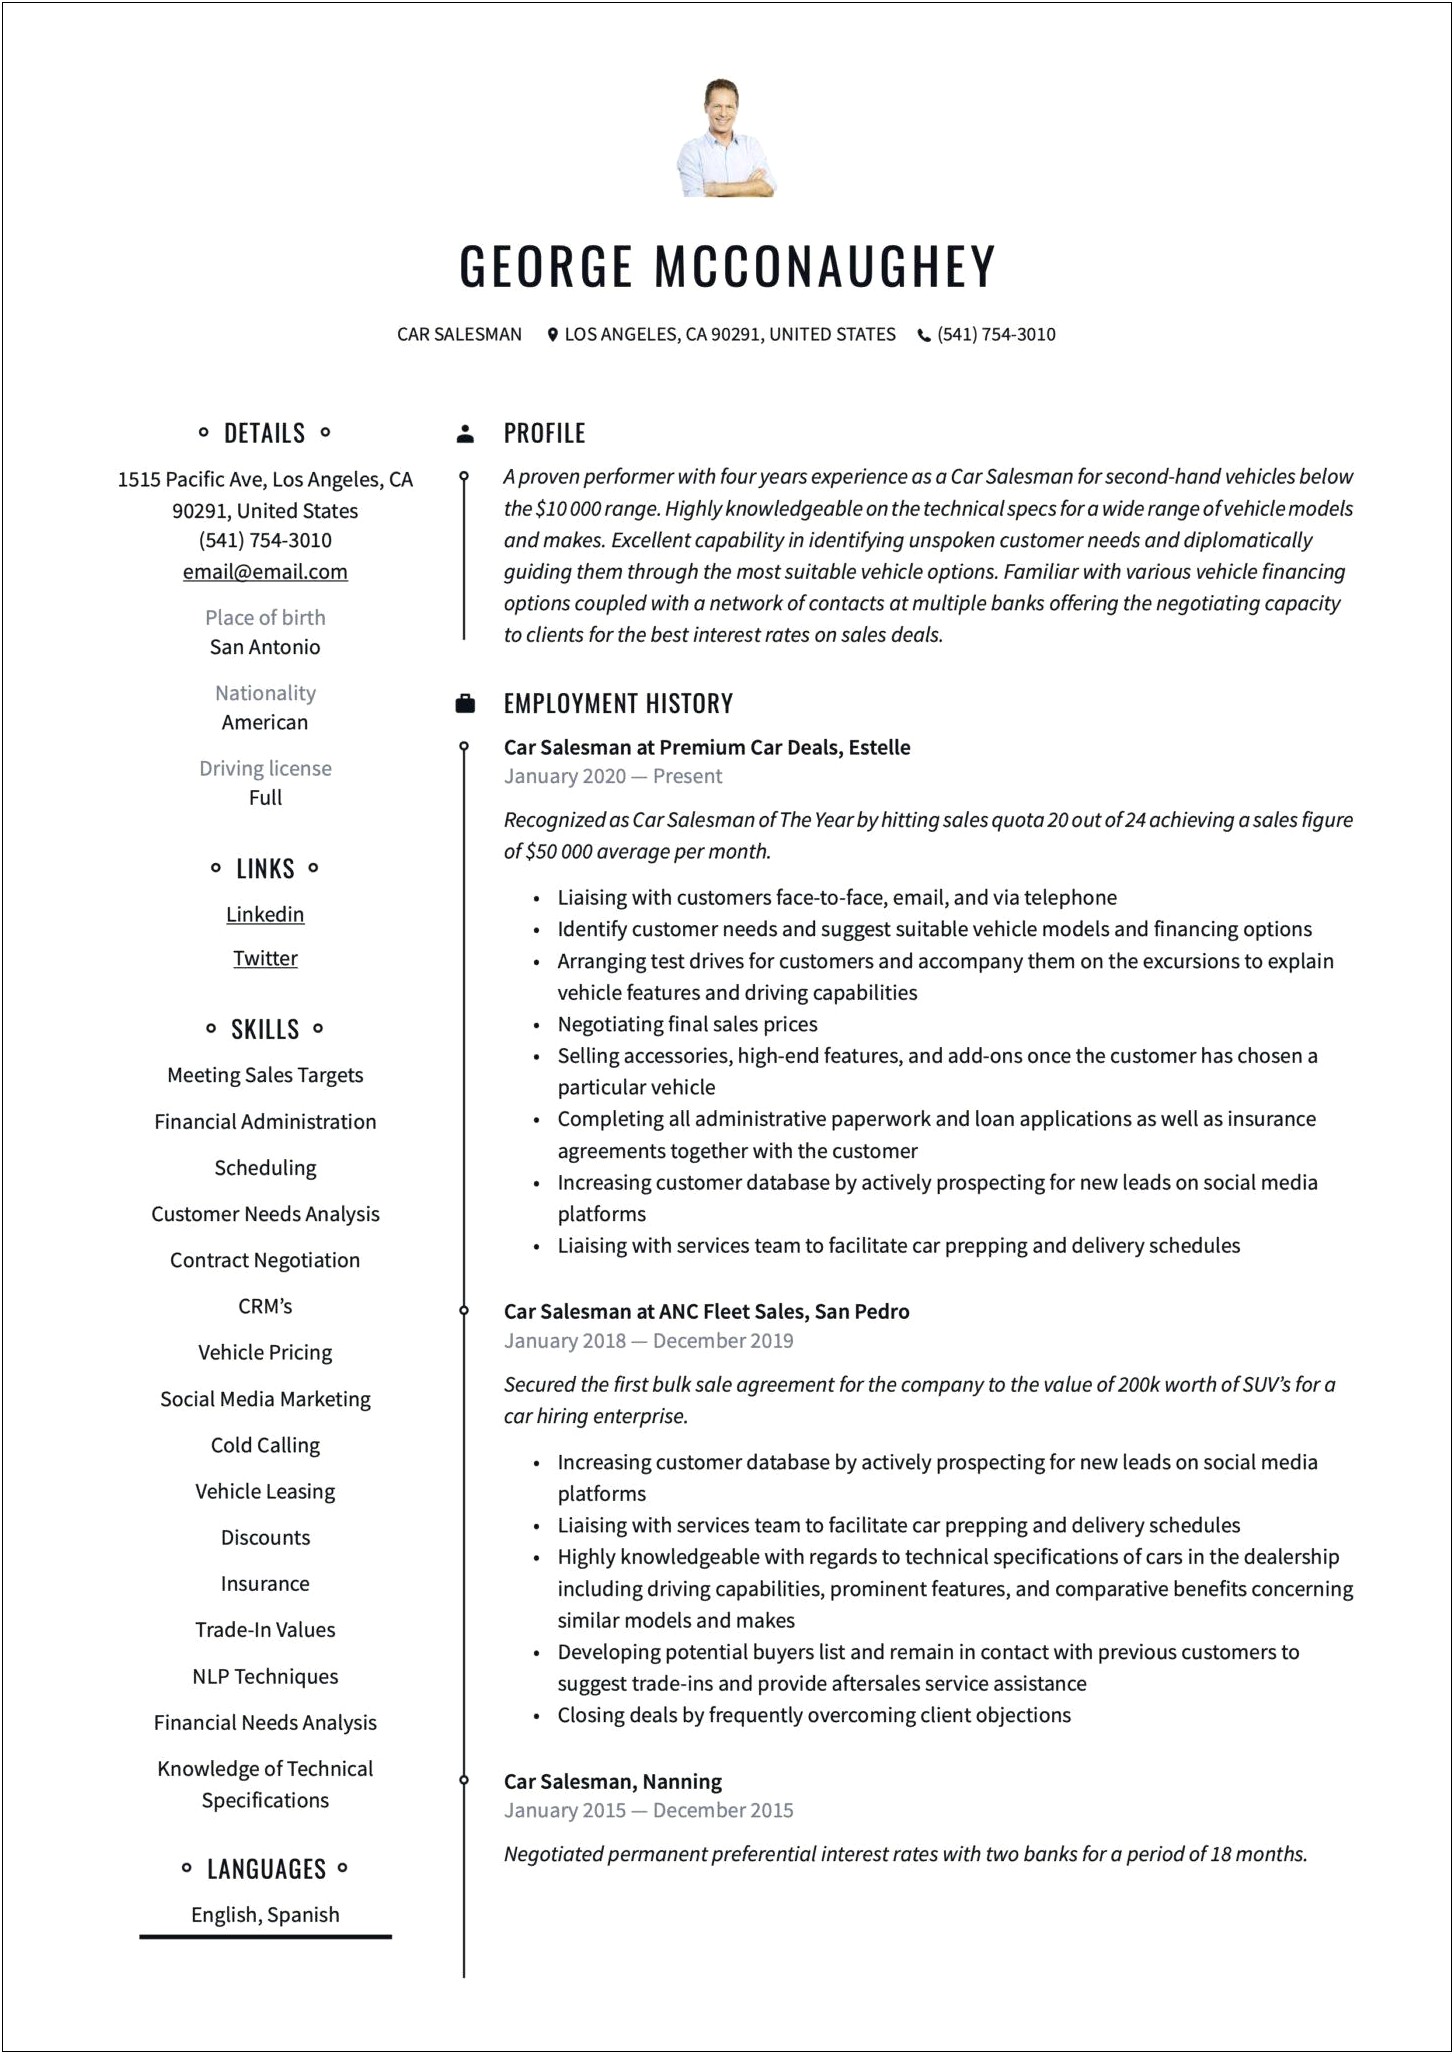 Resume Job Description For Cars Salesman